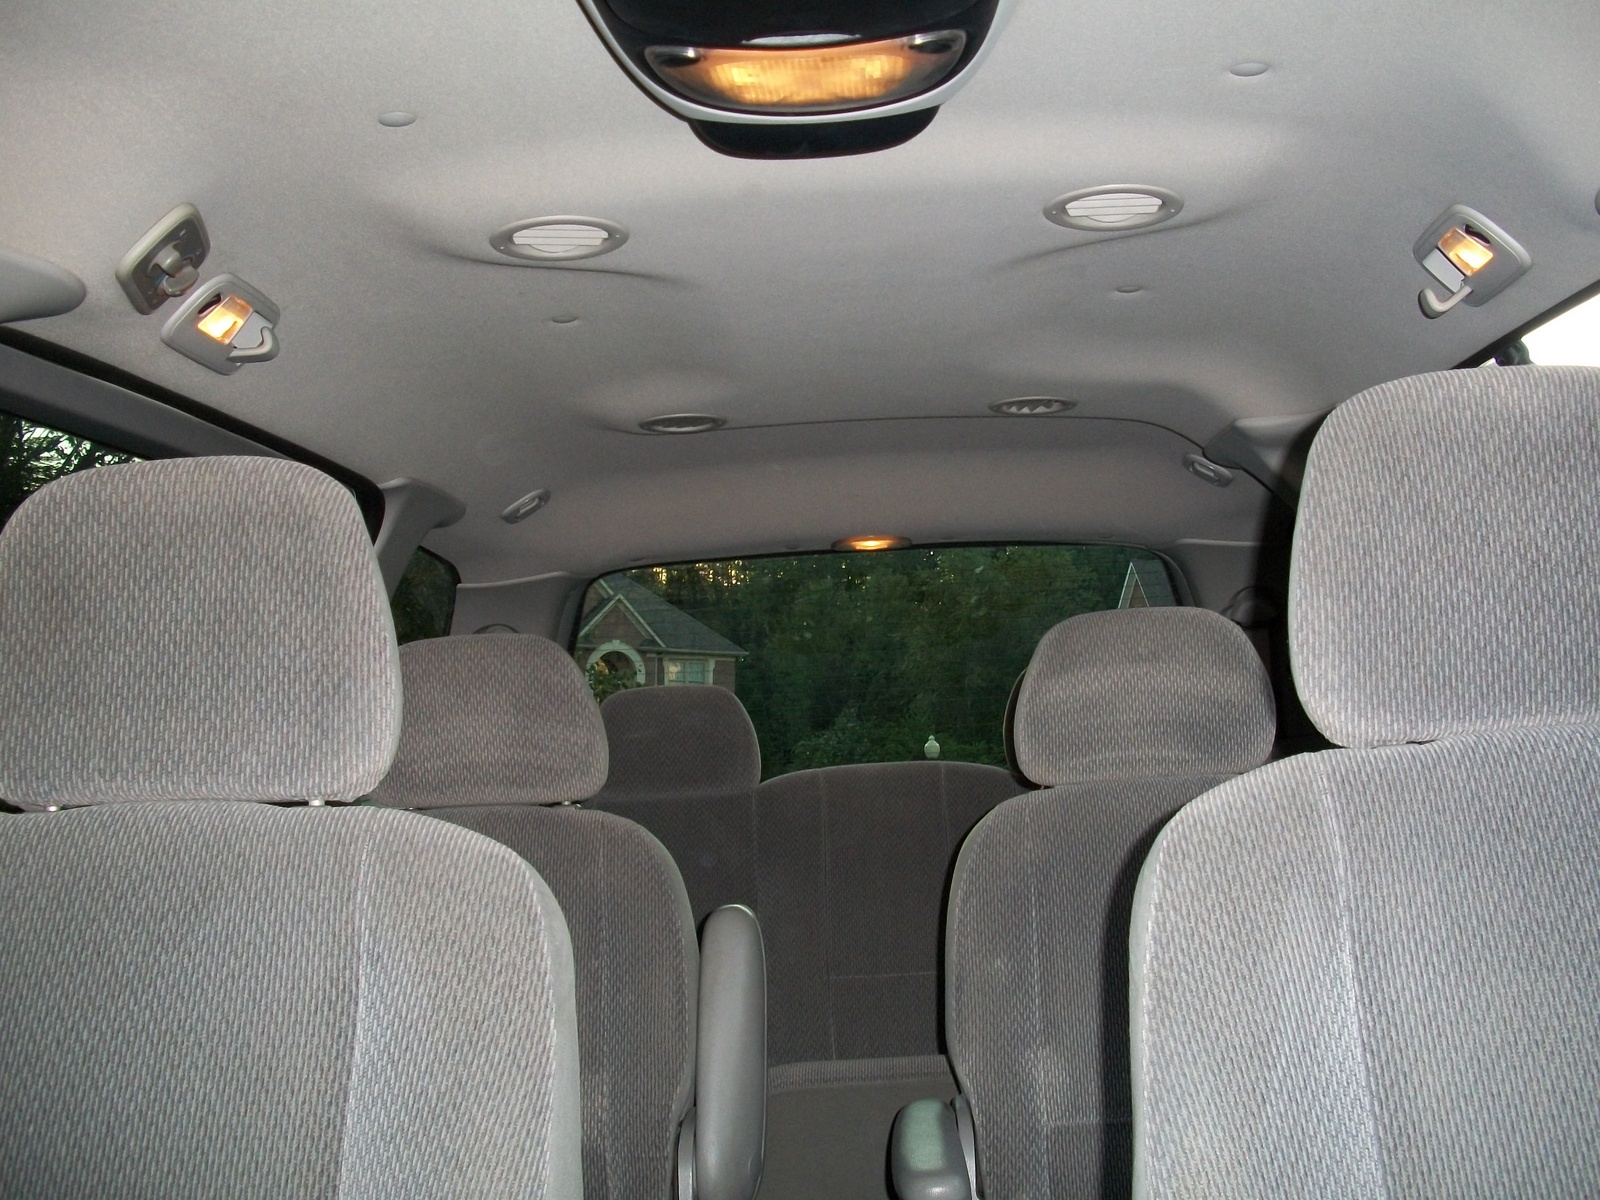 2002 Ford windstar interior dimensions #9